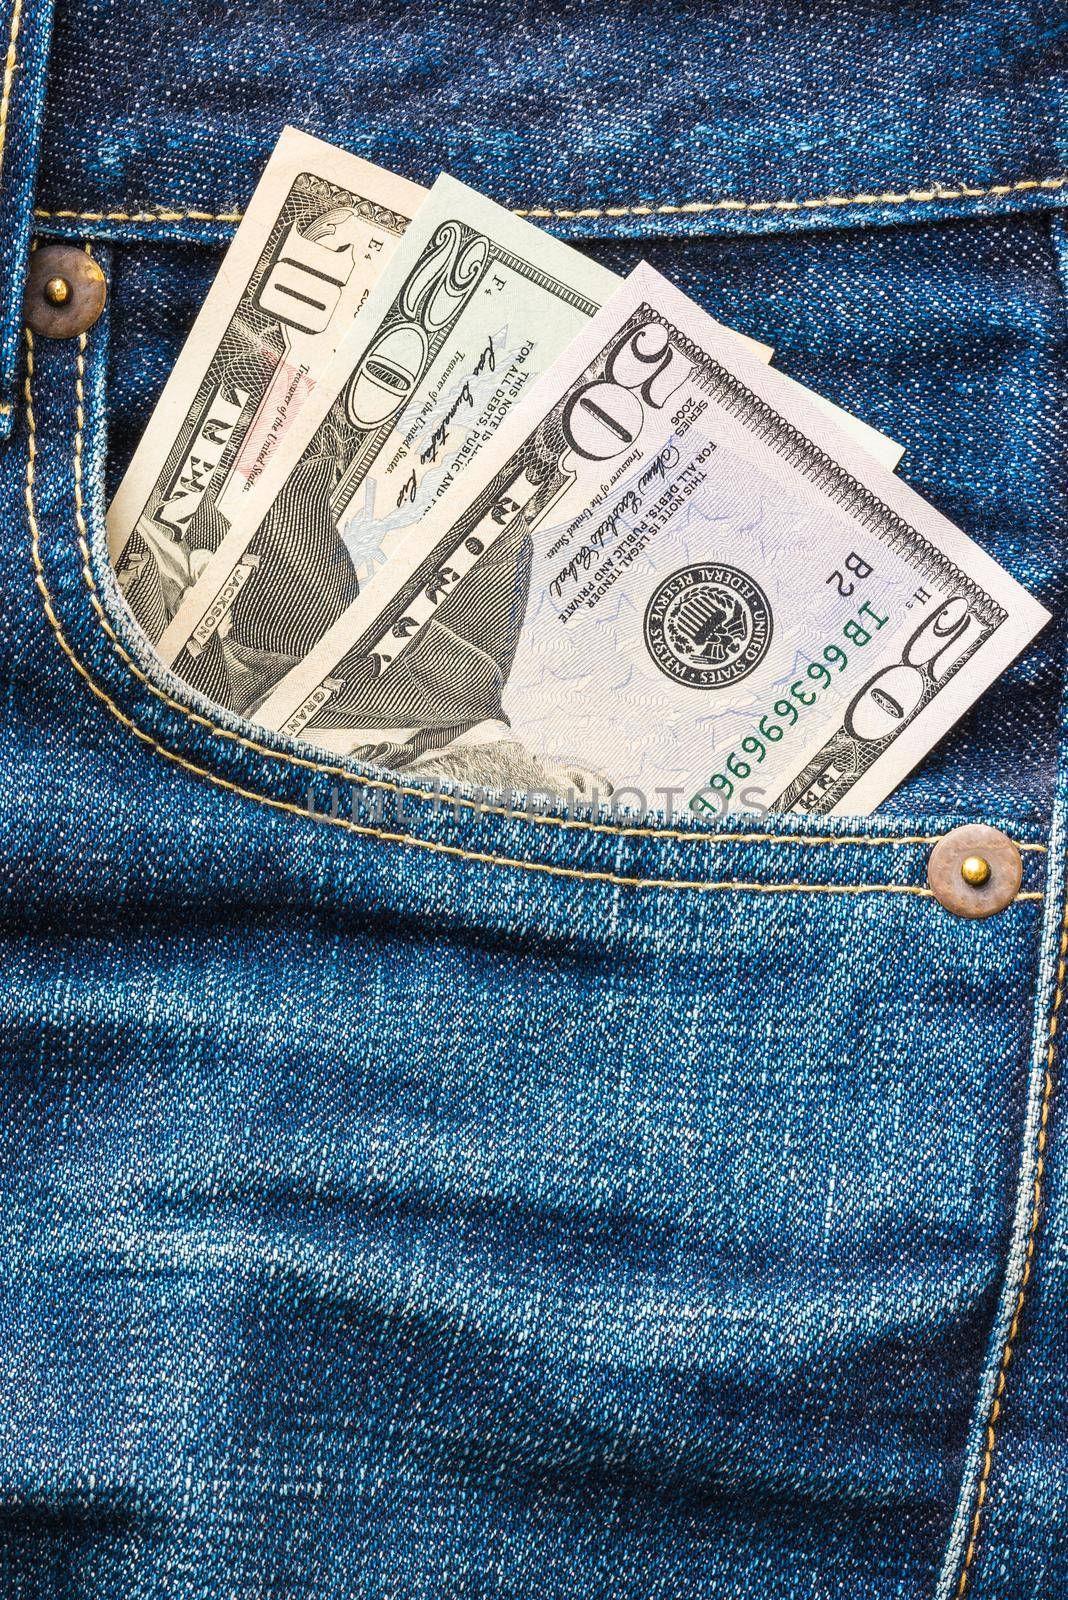 American US Dollar money in the indigo blue jeans pocket.